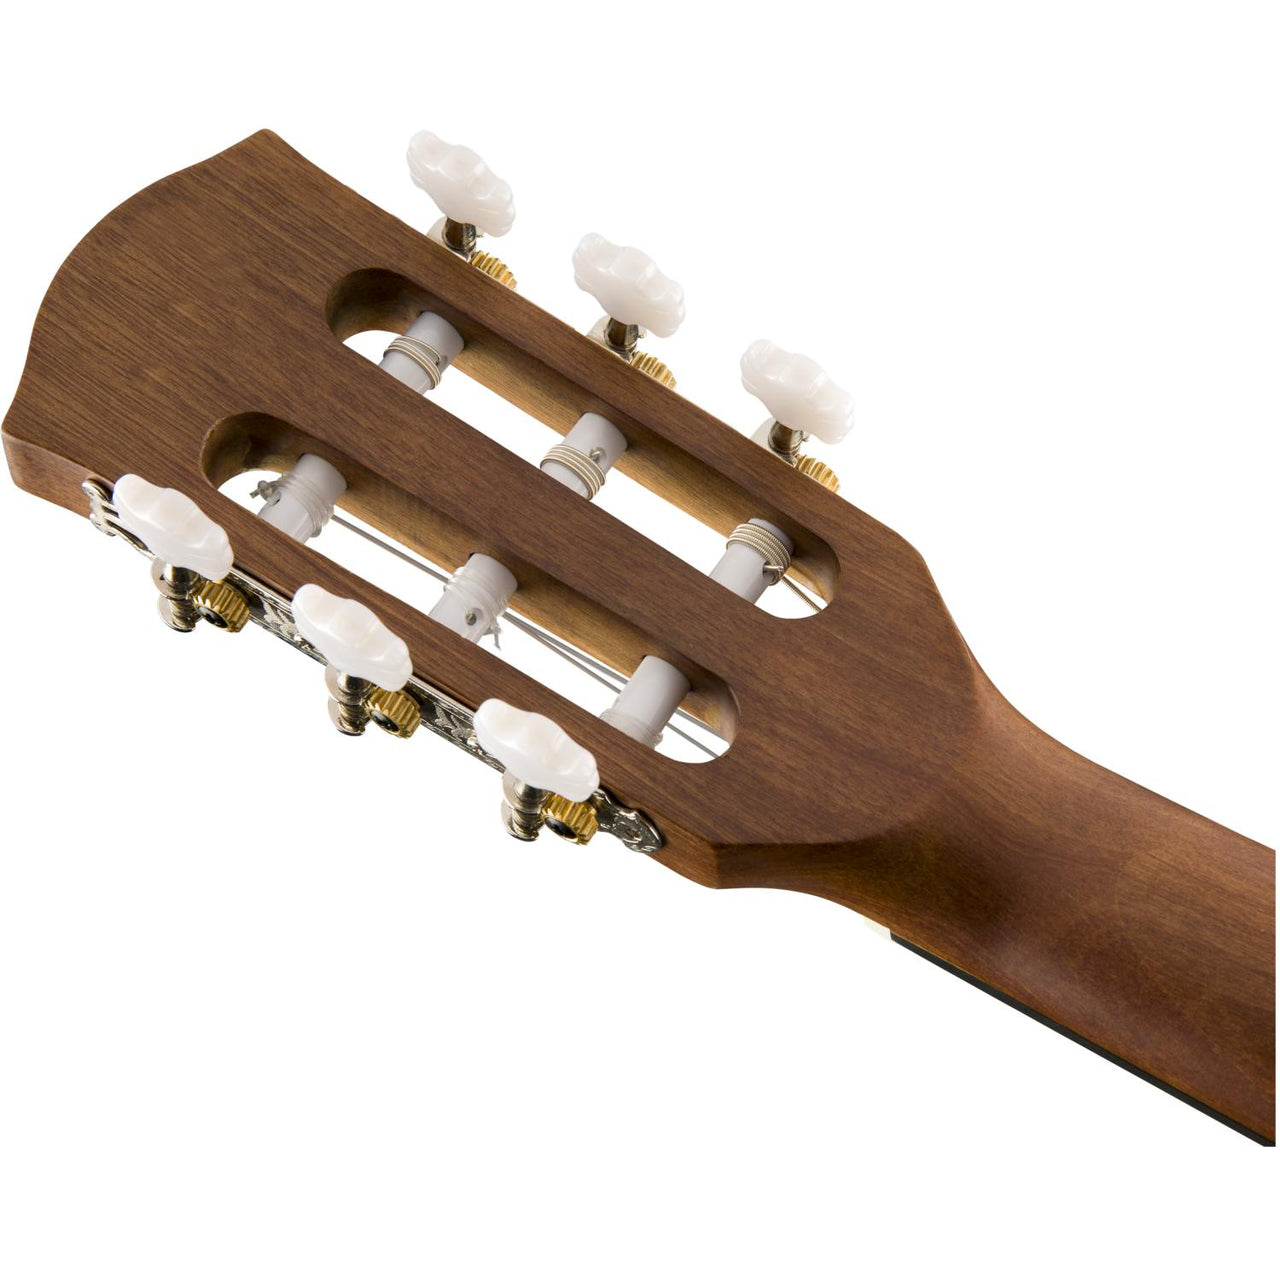 Guitarra Acustica Fender Fa 15n 3/4 Con Funda 0971160121